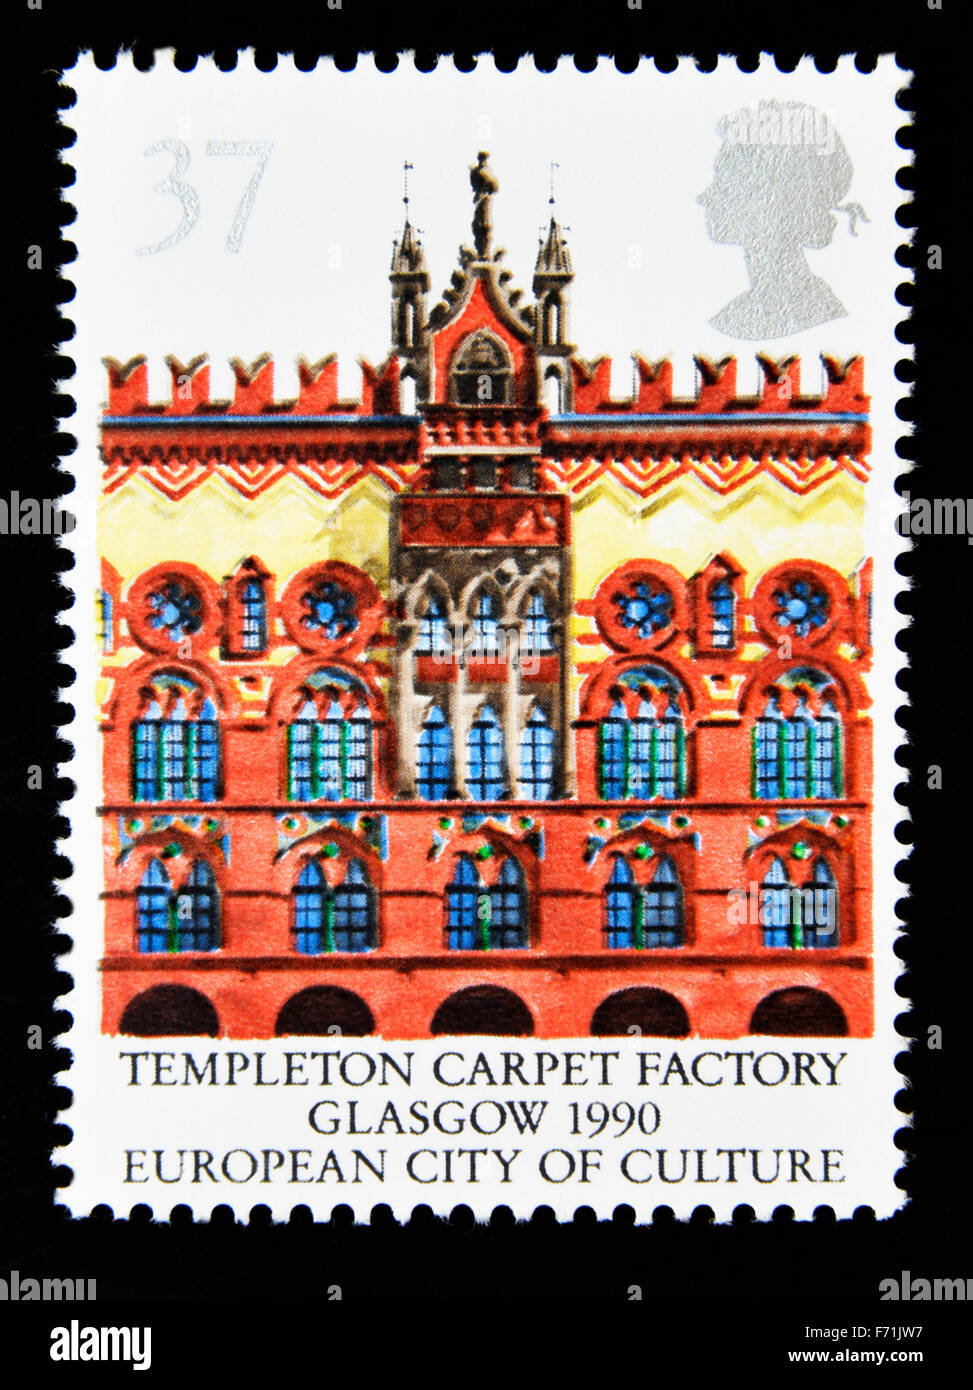 Postage stamp. Great Britain. Queen Elizabeth II. 1990. Glasgow 1990 European City of Culture. 37p. Stock Photo